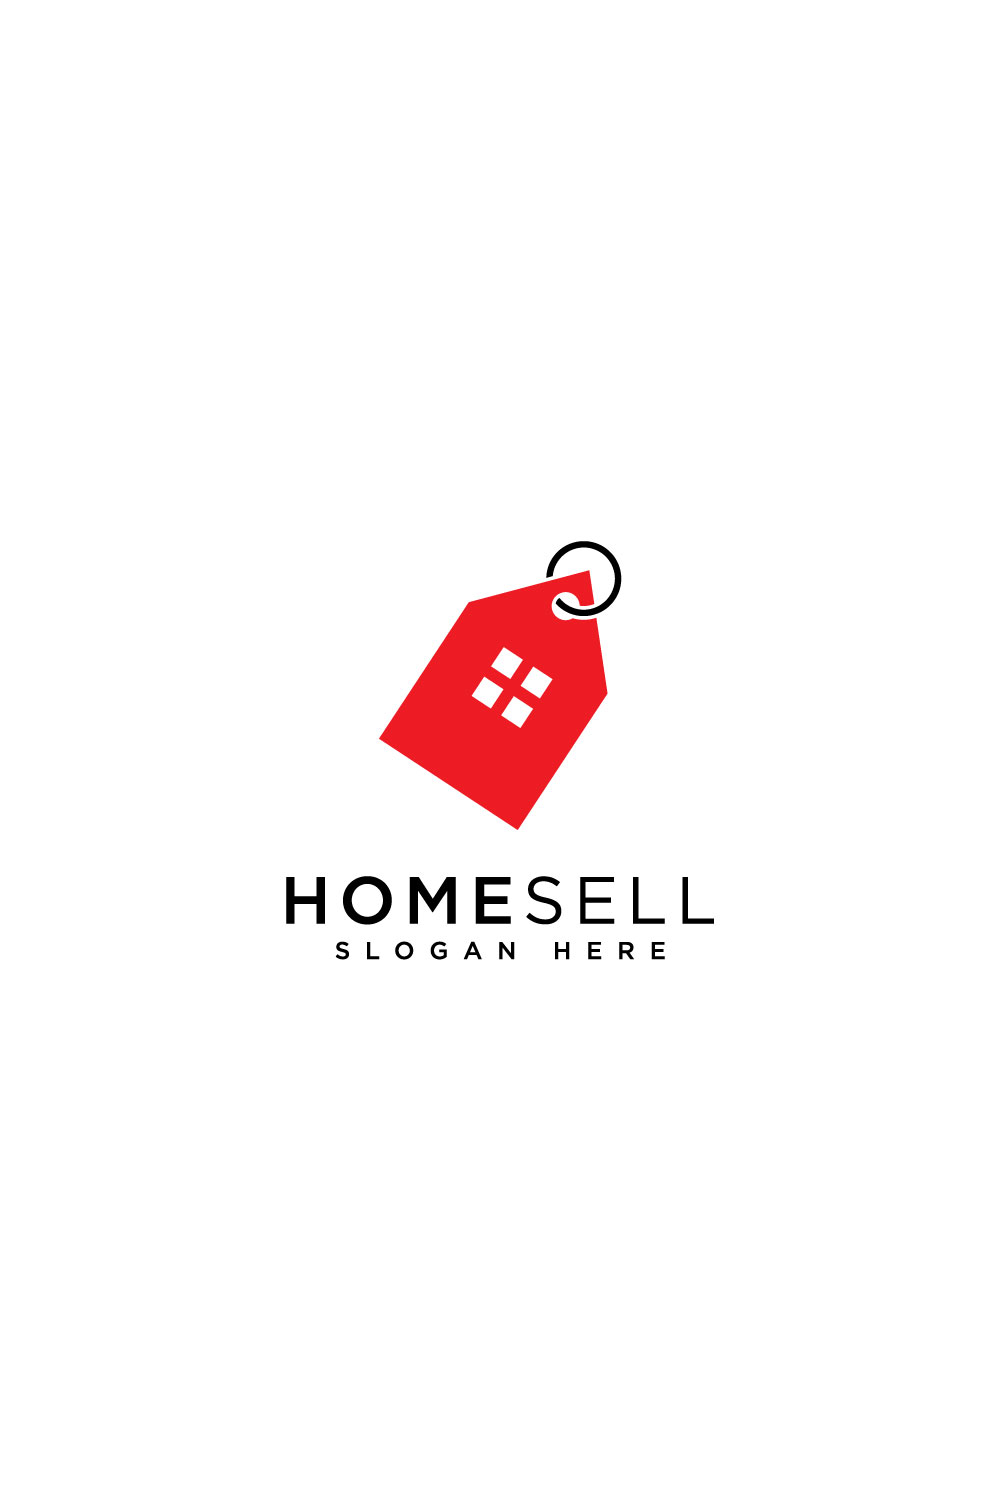 home sell logo design vector pinterest preview image.